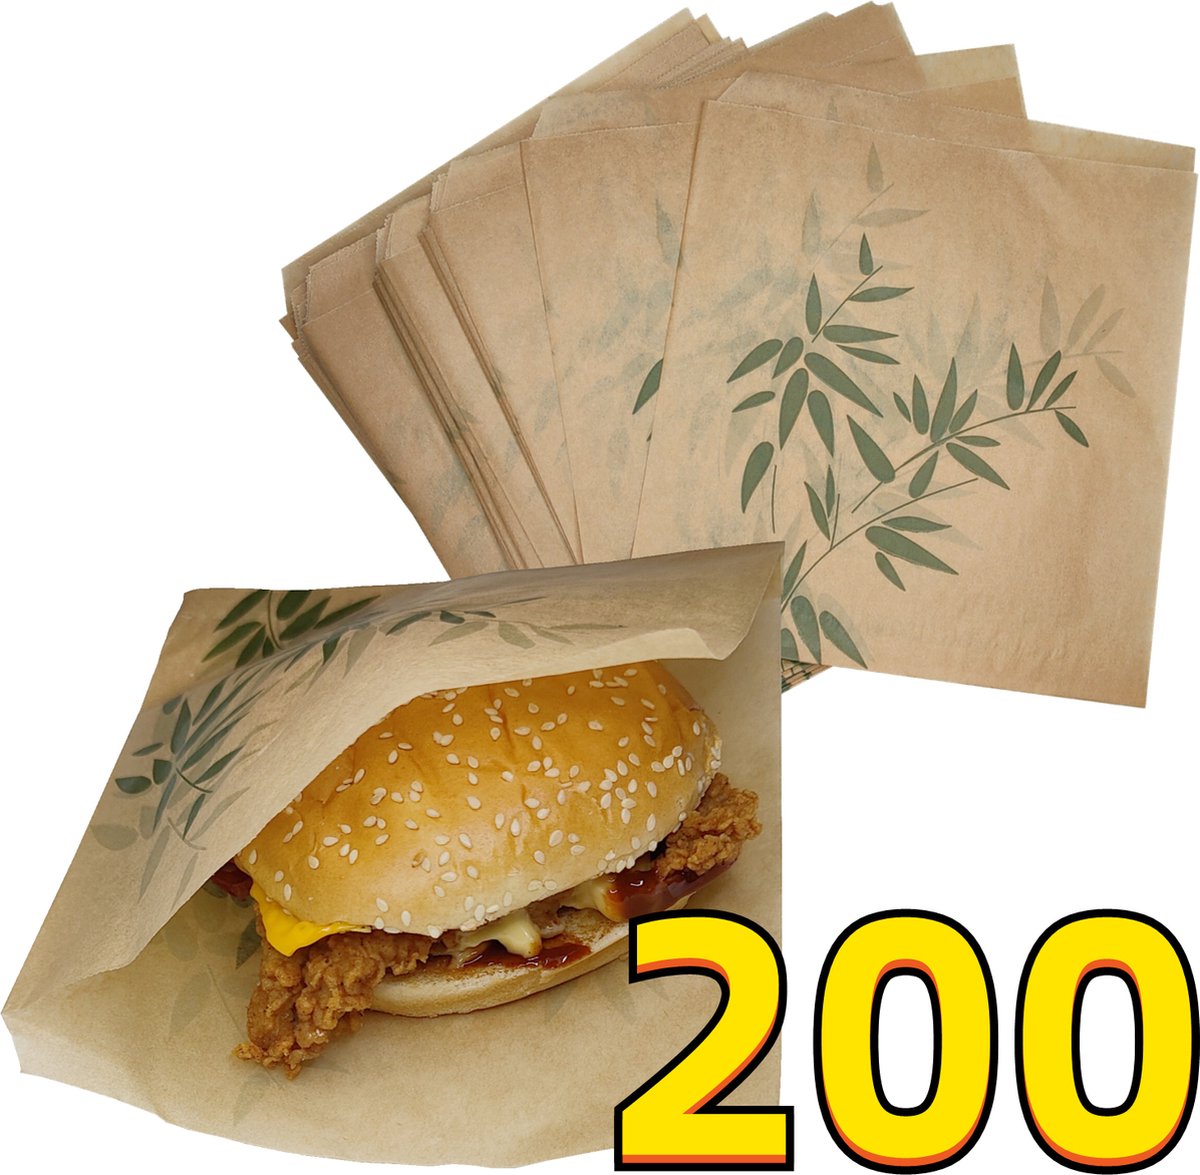 Rainbecom - 200 Stuks - 19 x 17 cm - Hamburger Zakje Papier - Vetvrij Papier - Papieren Zak voor Sandwiches - Bamboe